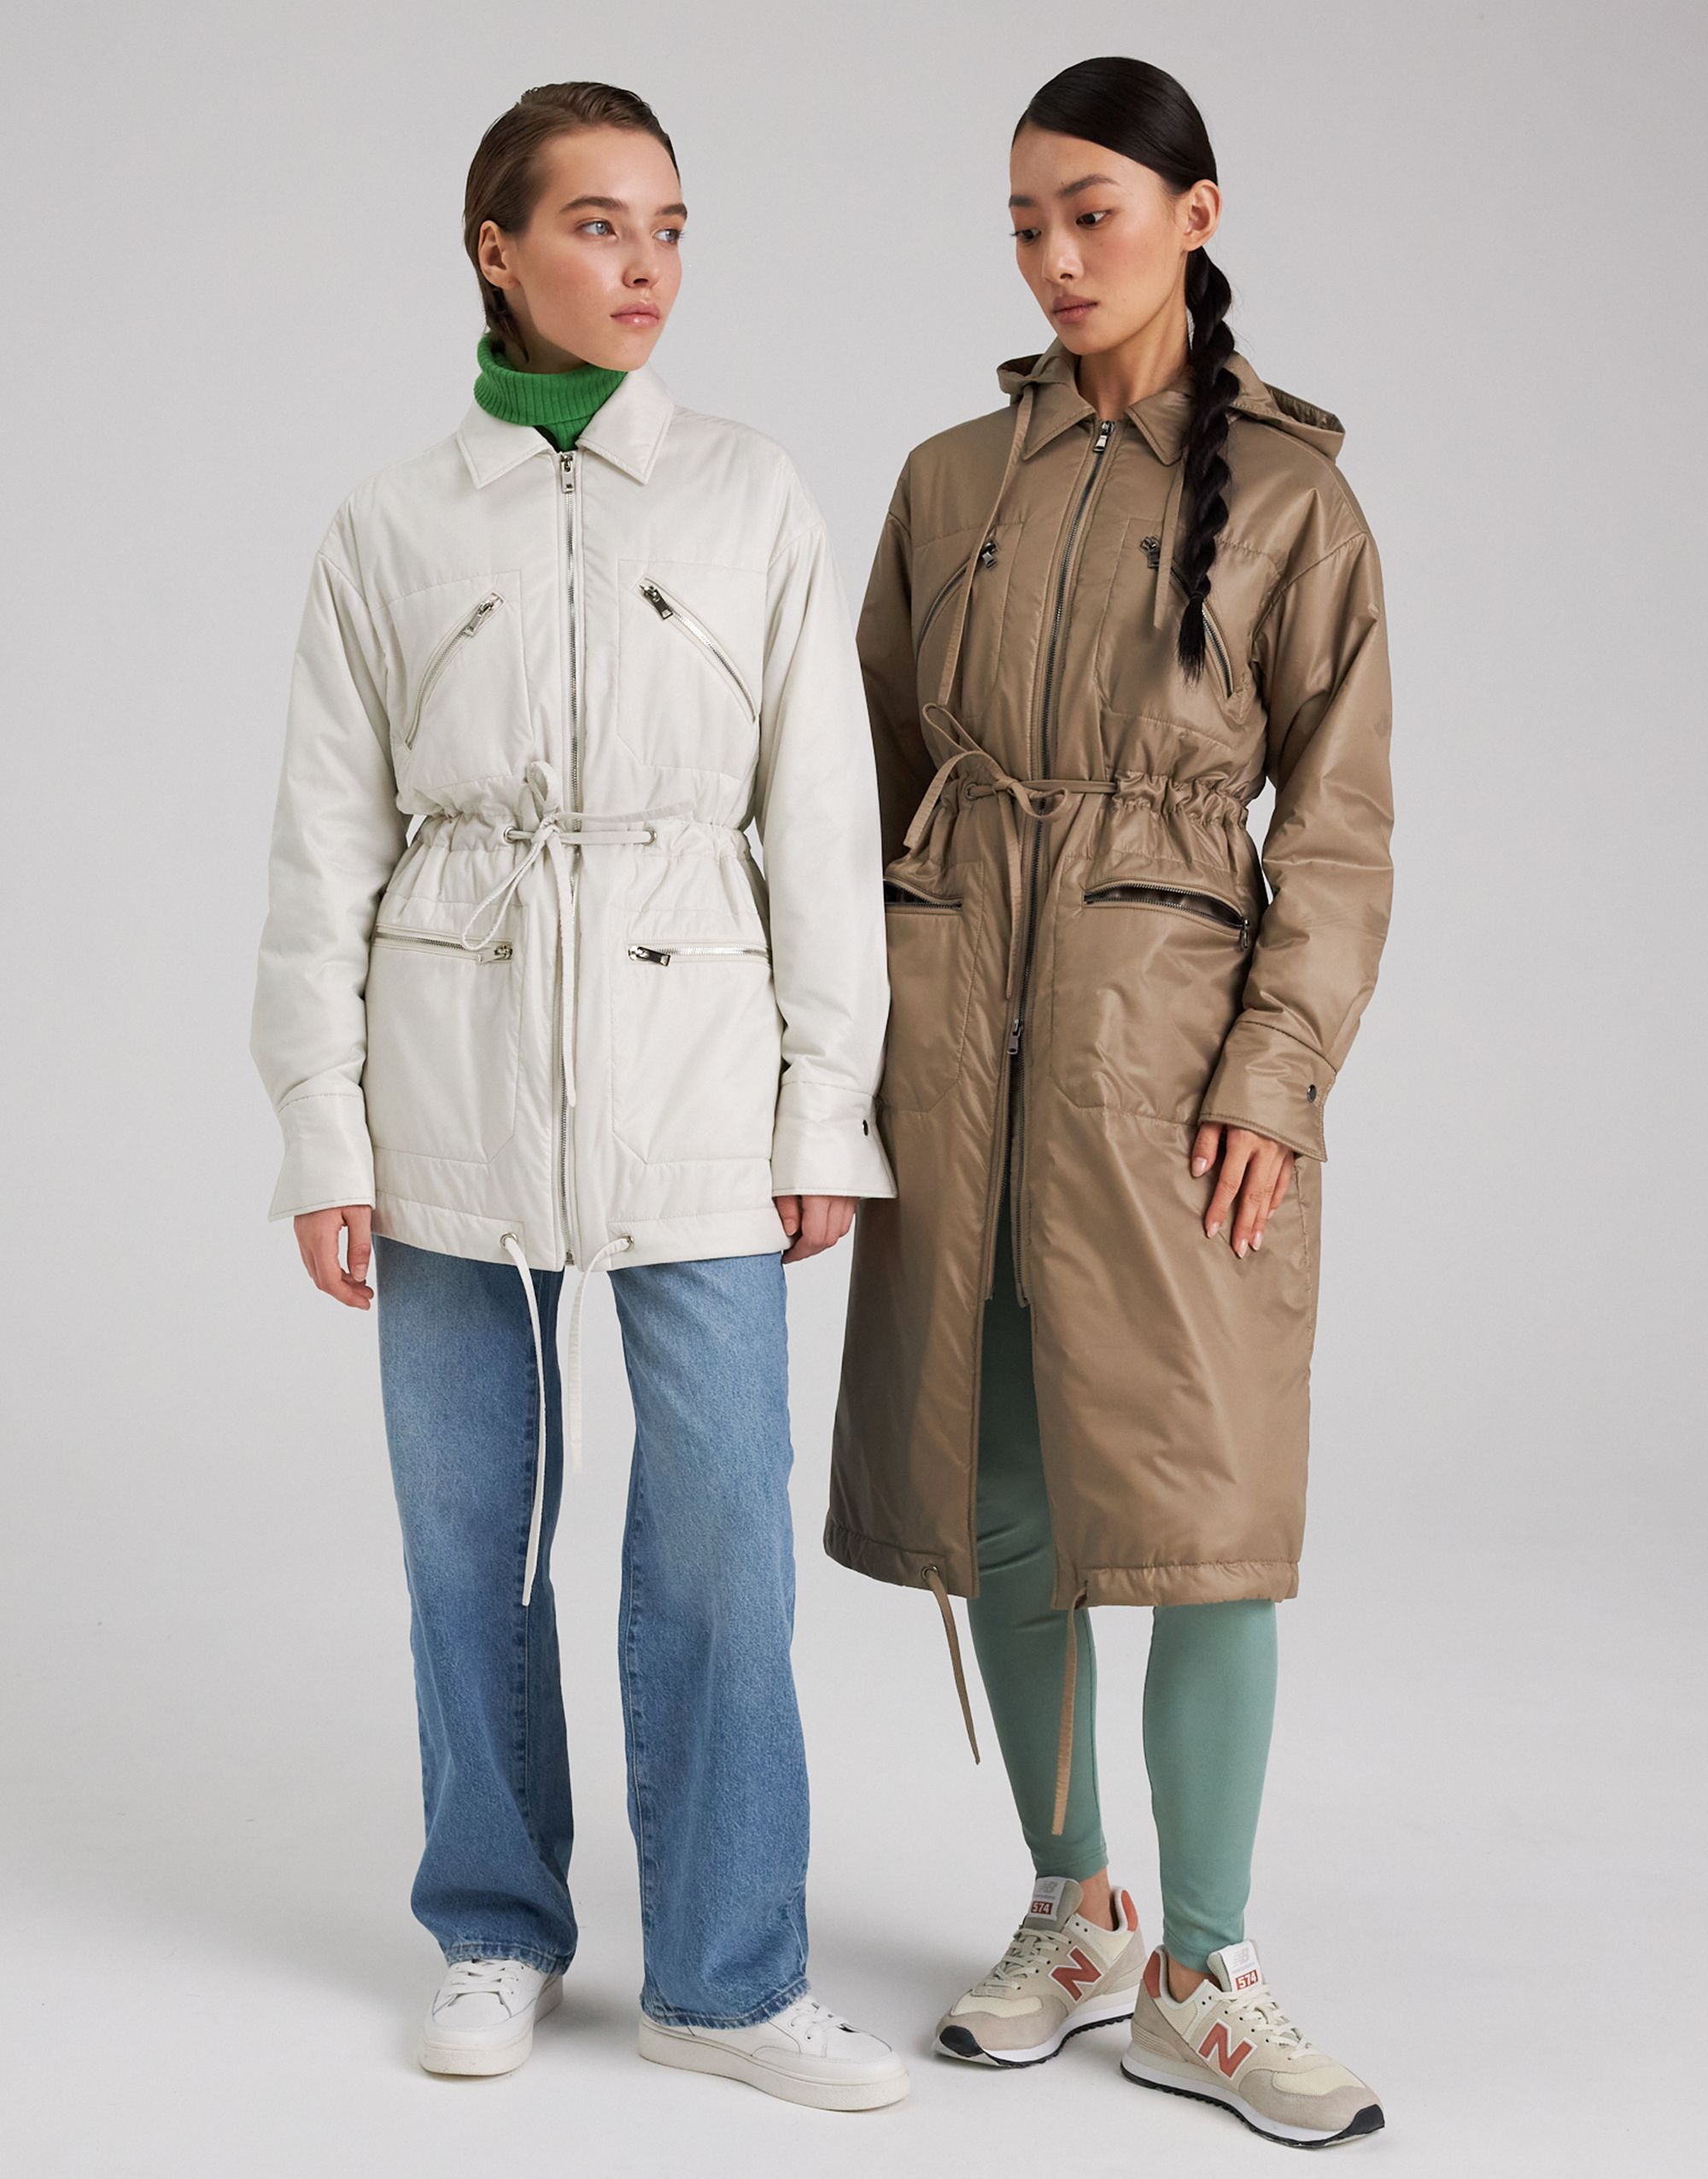 Coat and jacket, pattern №1001